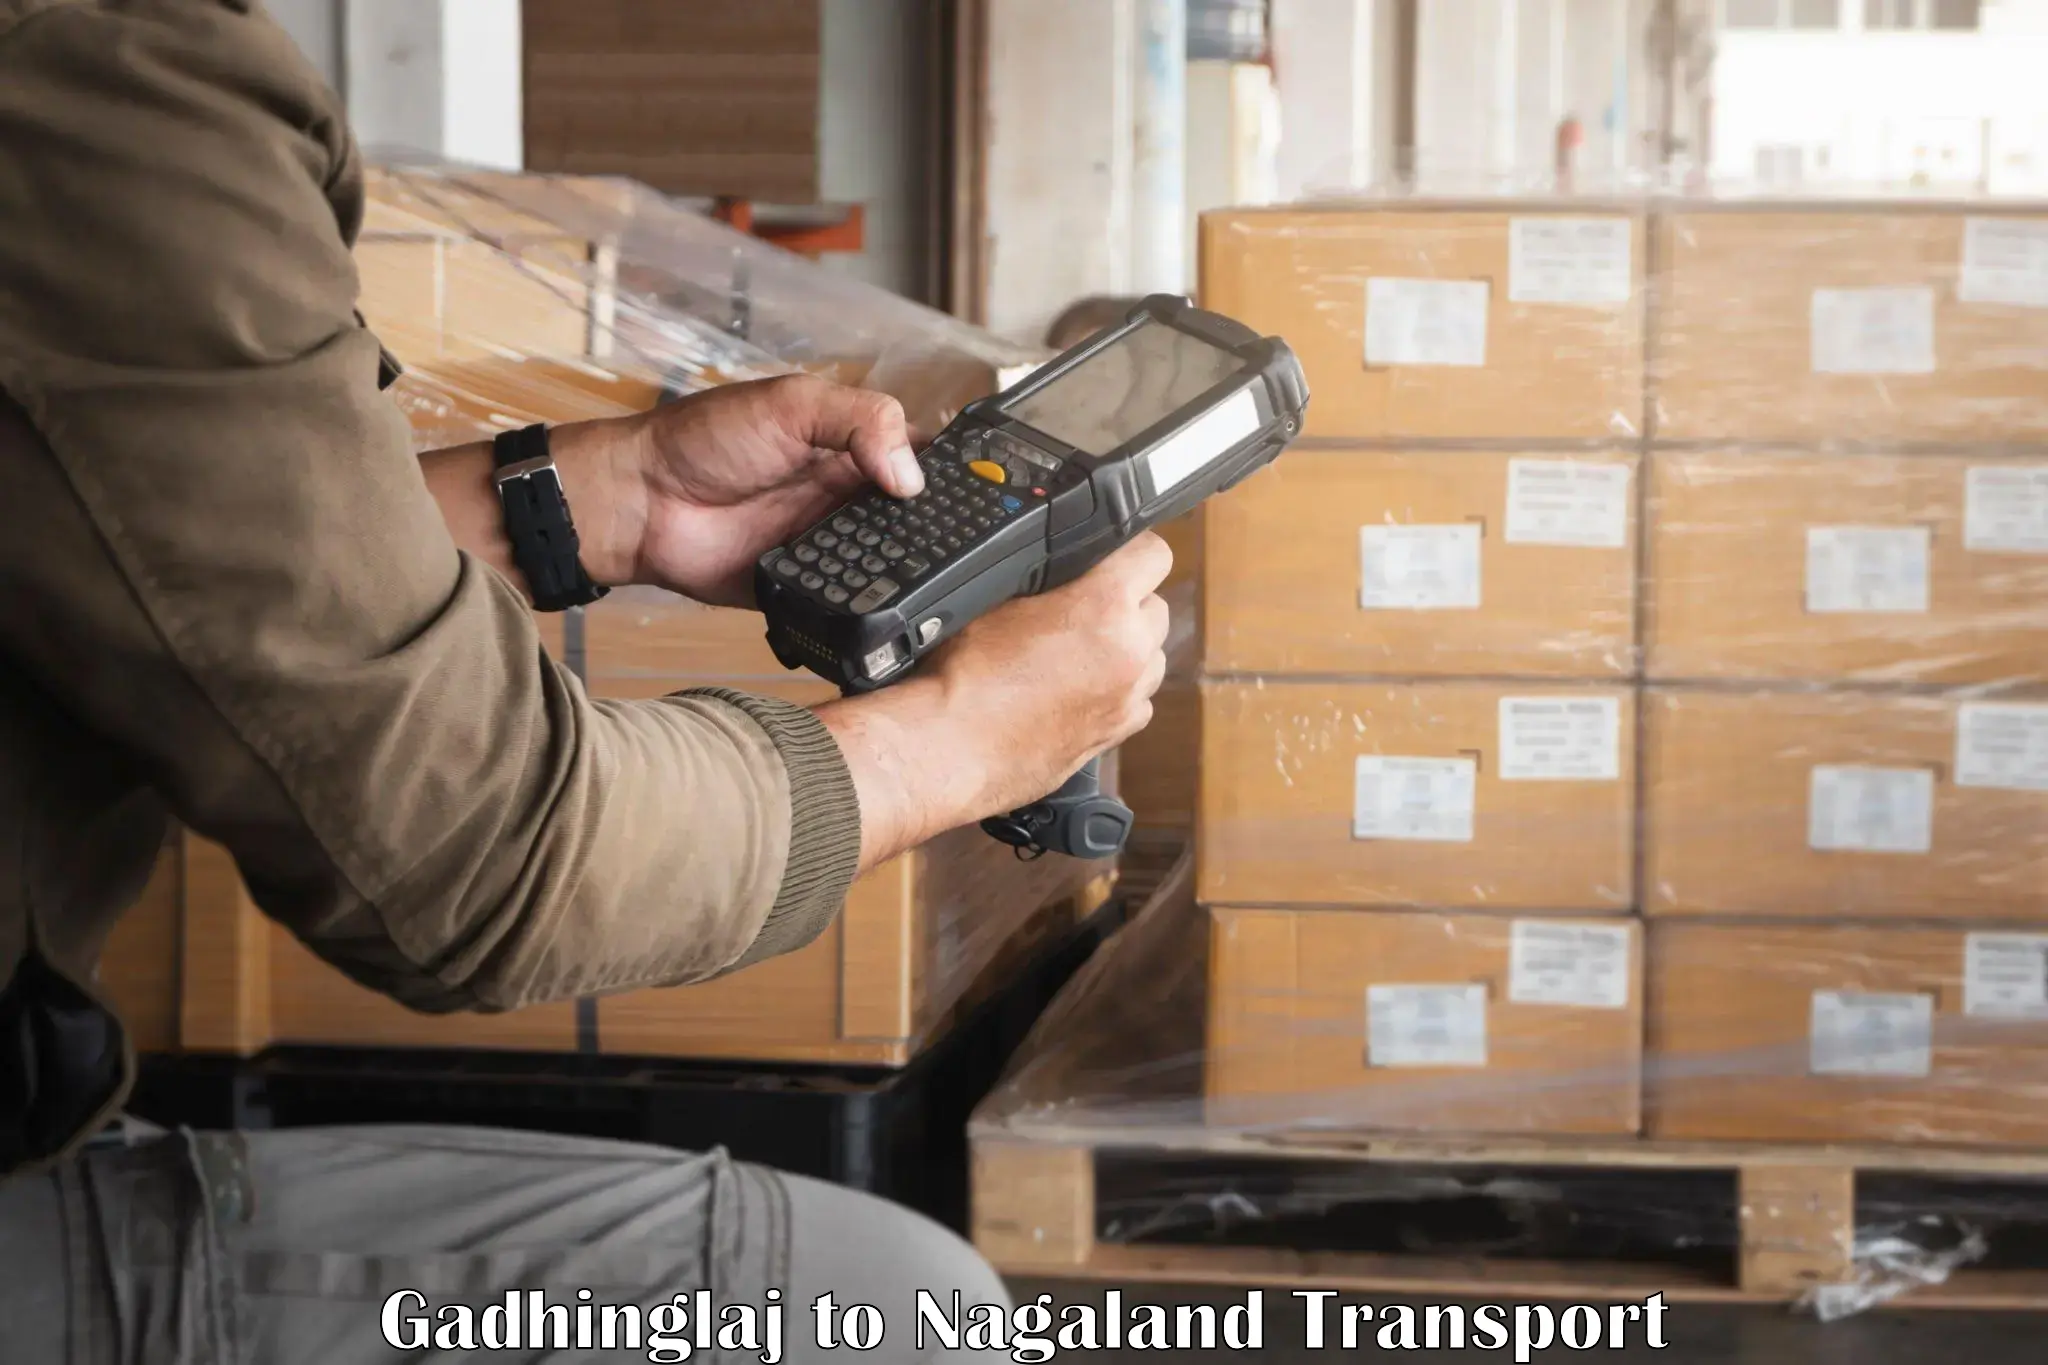 Transport shared services in Gadhinglaj to Nagaland